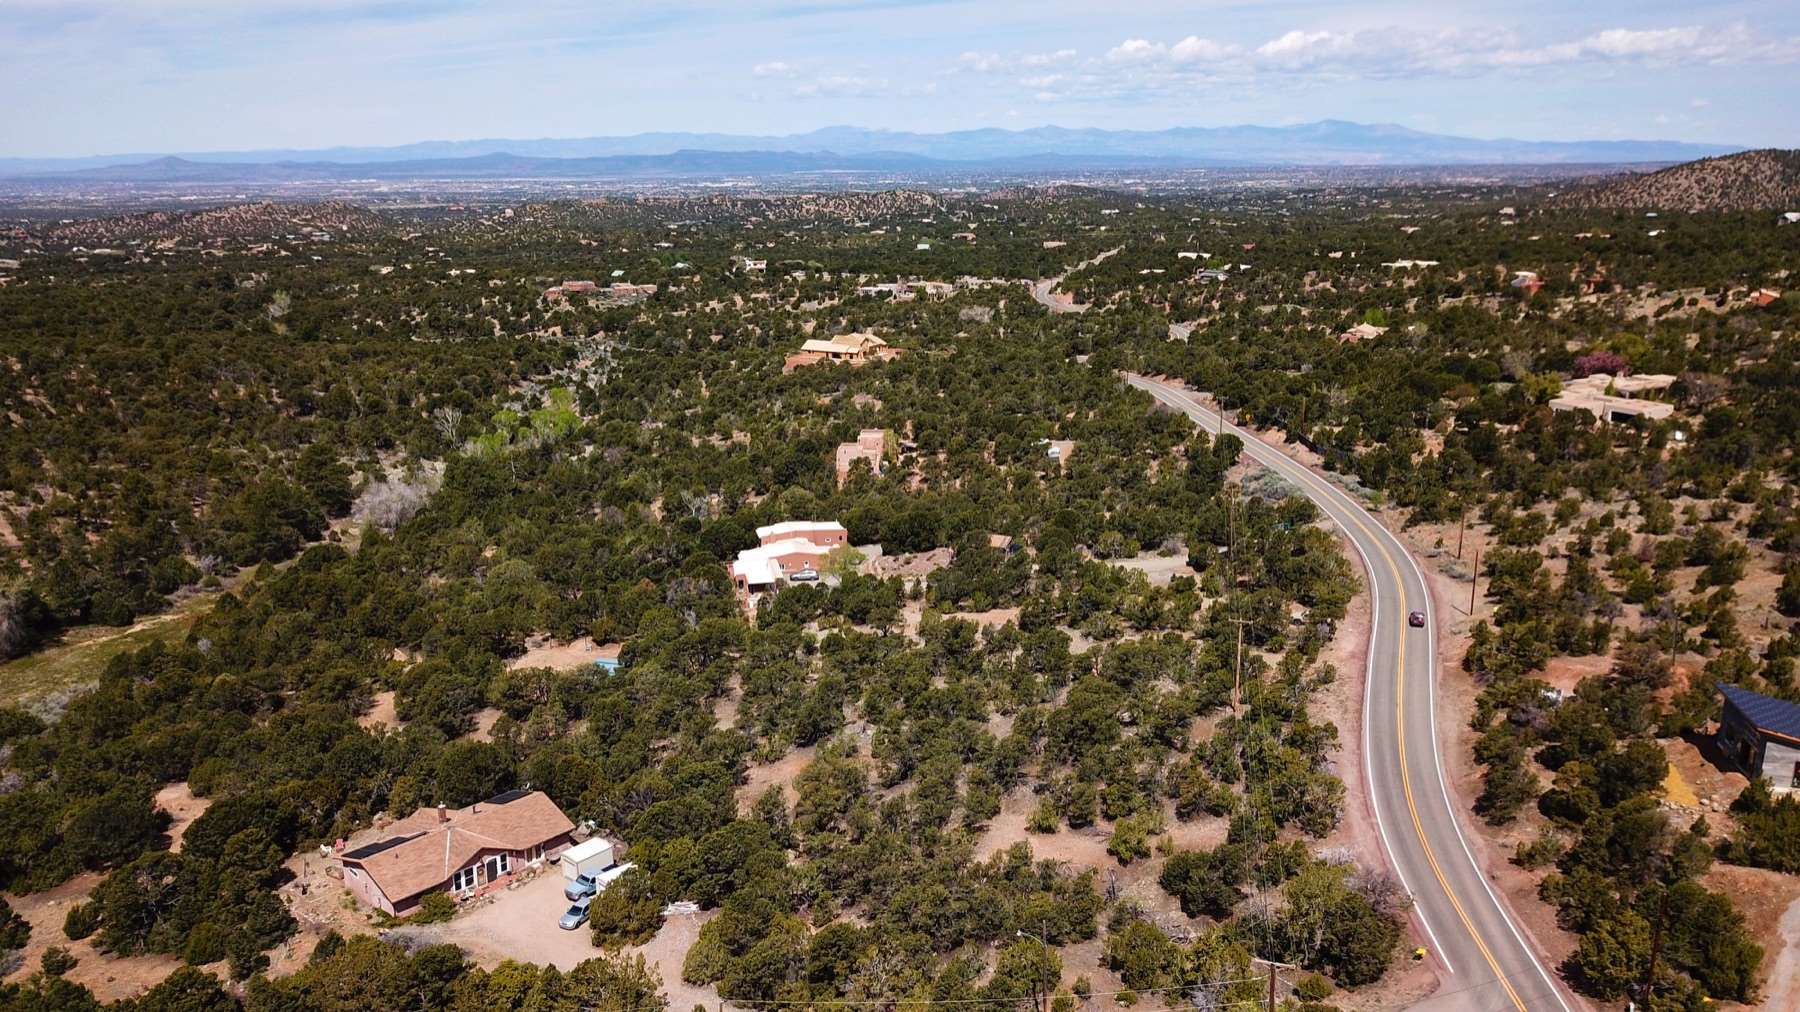 26 A Old Santa Fe, Santa Fe, New Mexico 87505, ,Land,For Sale,26 A Old Santa Fe,201802825